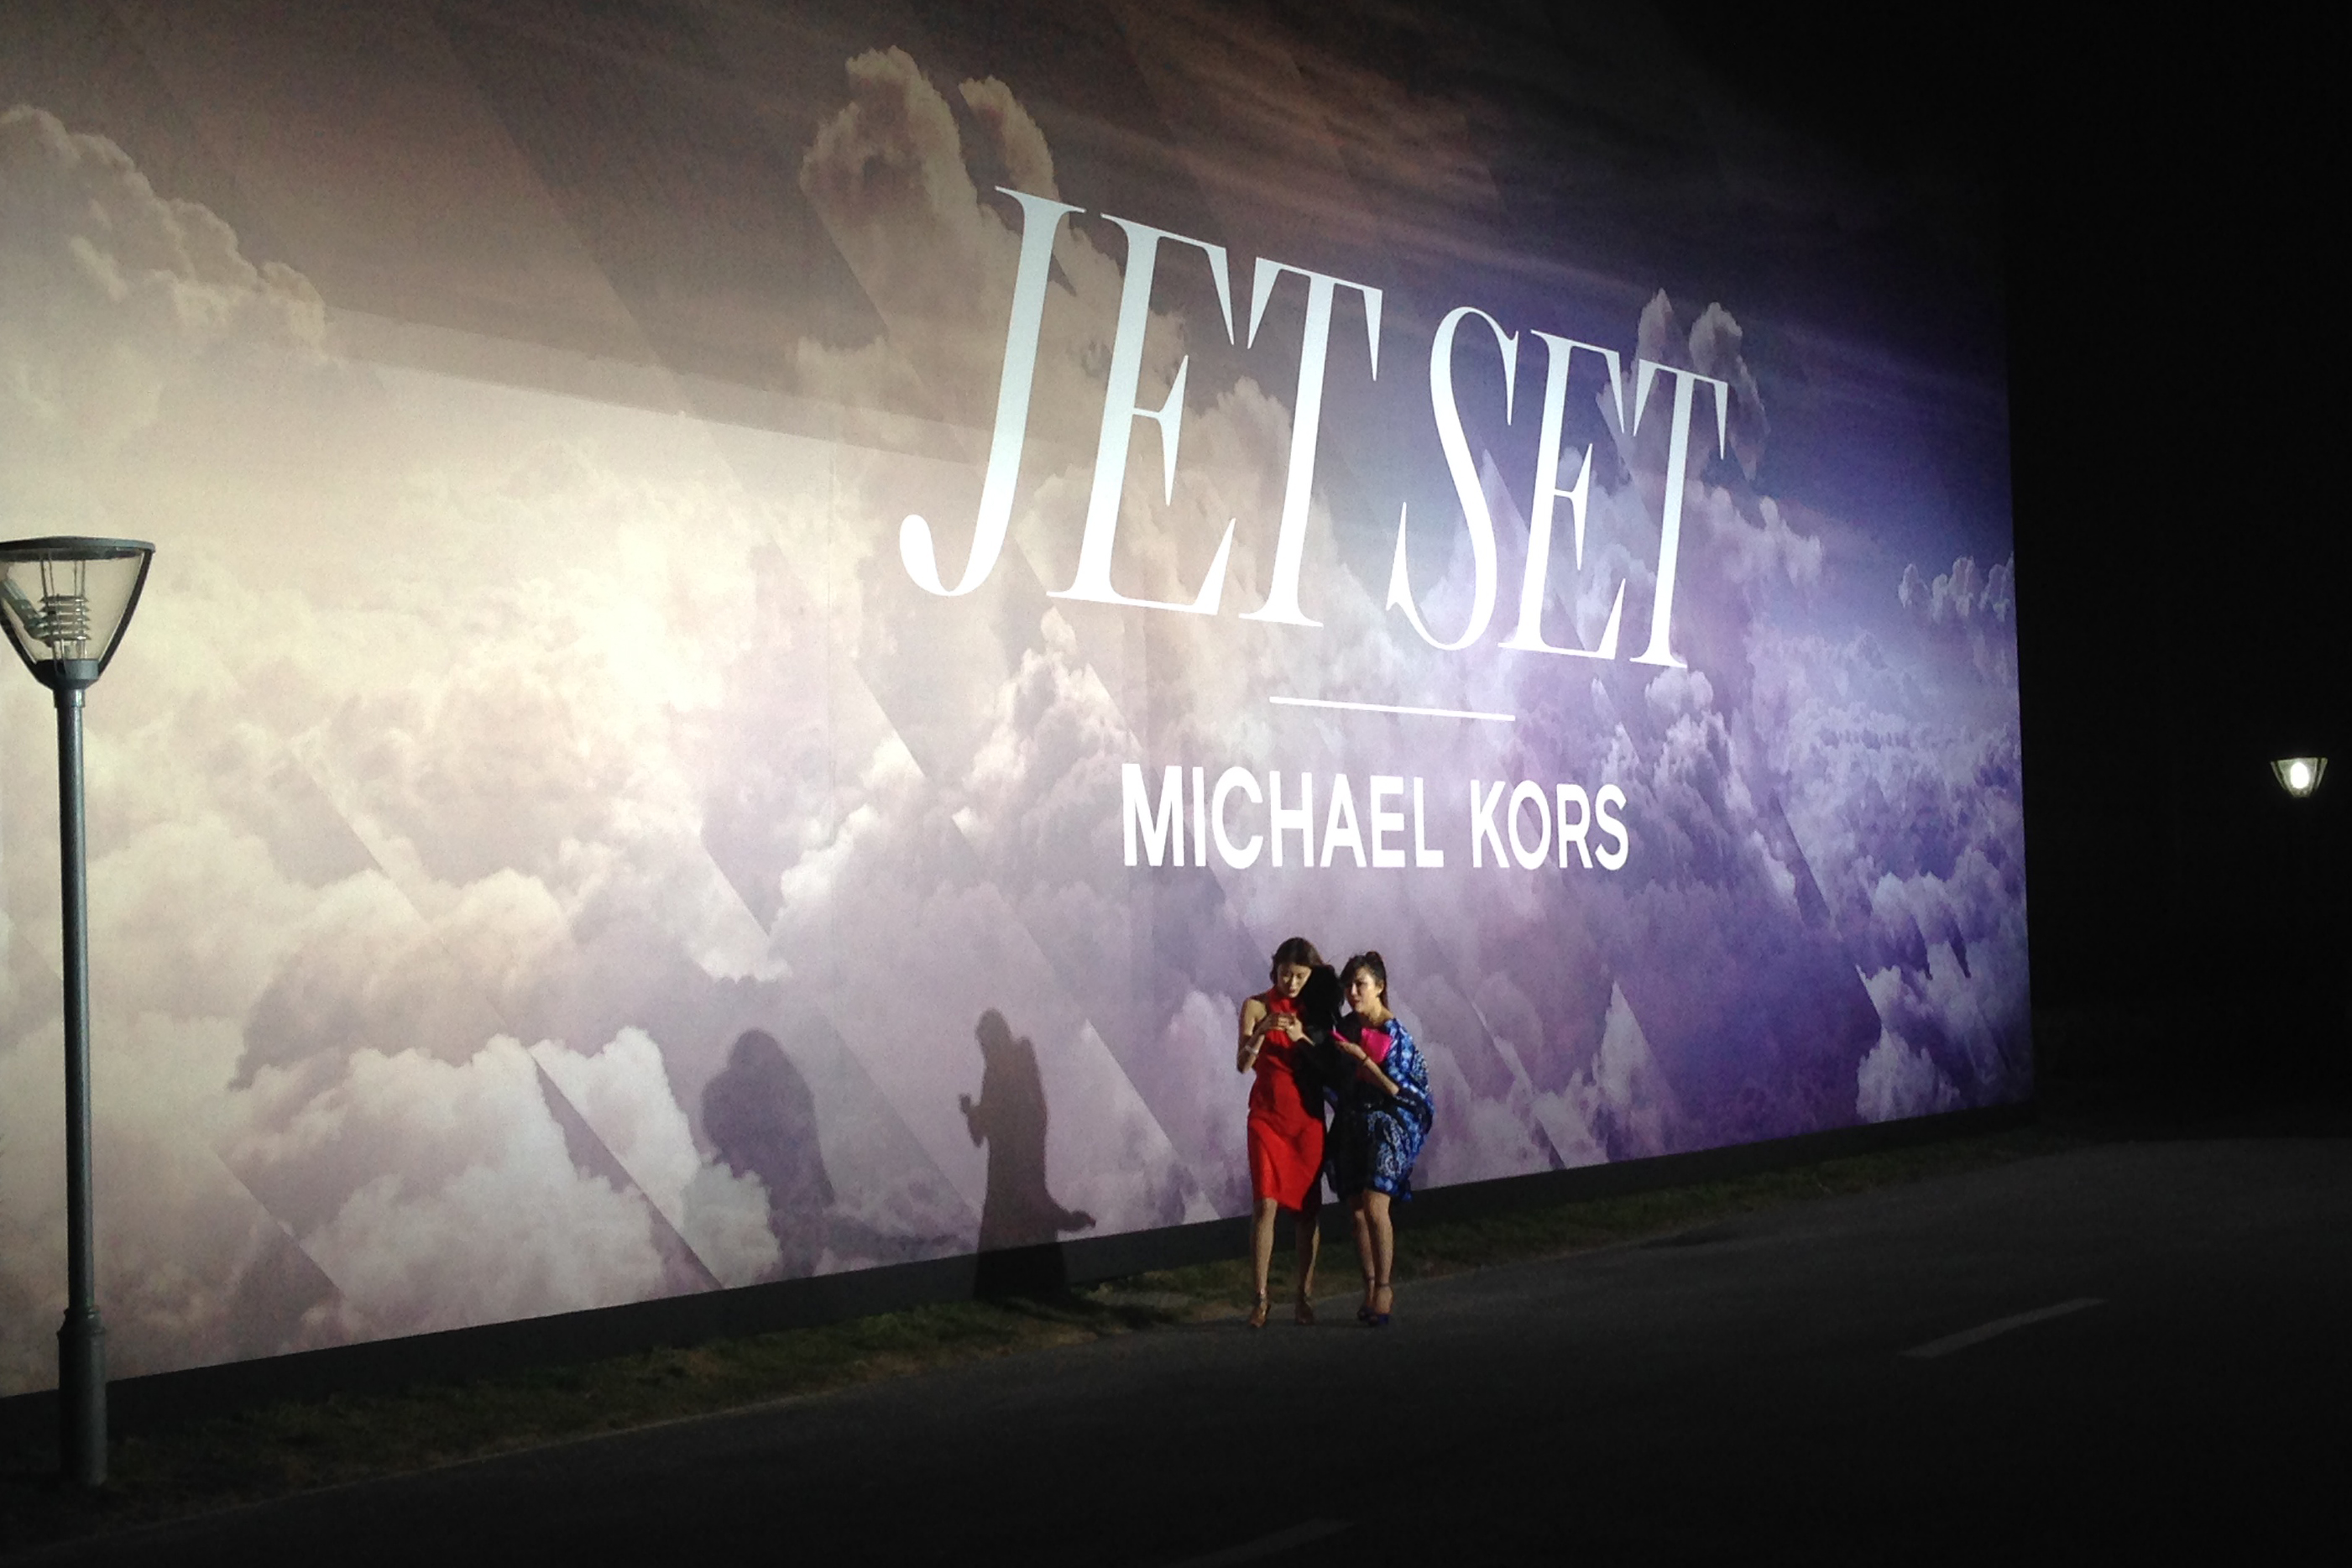 Largest-ever hologram screen for Michael Kors Jet Set show | Musion